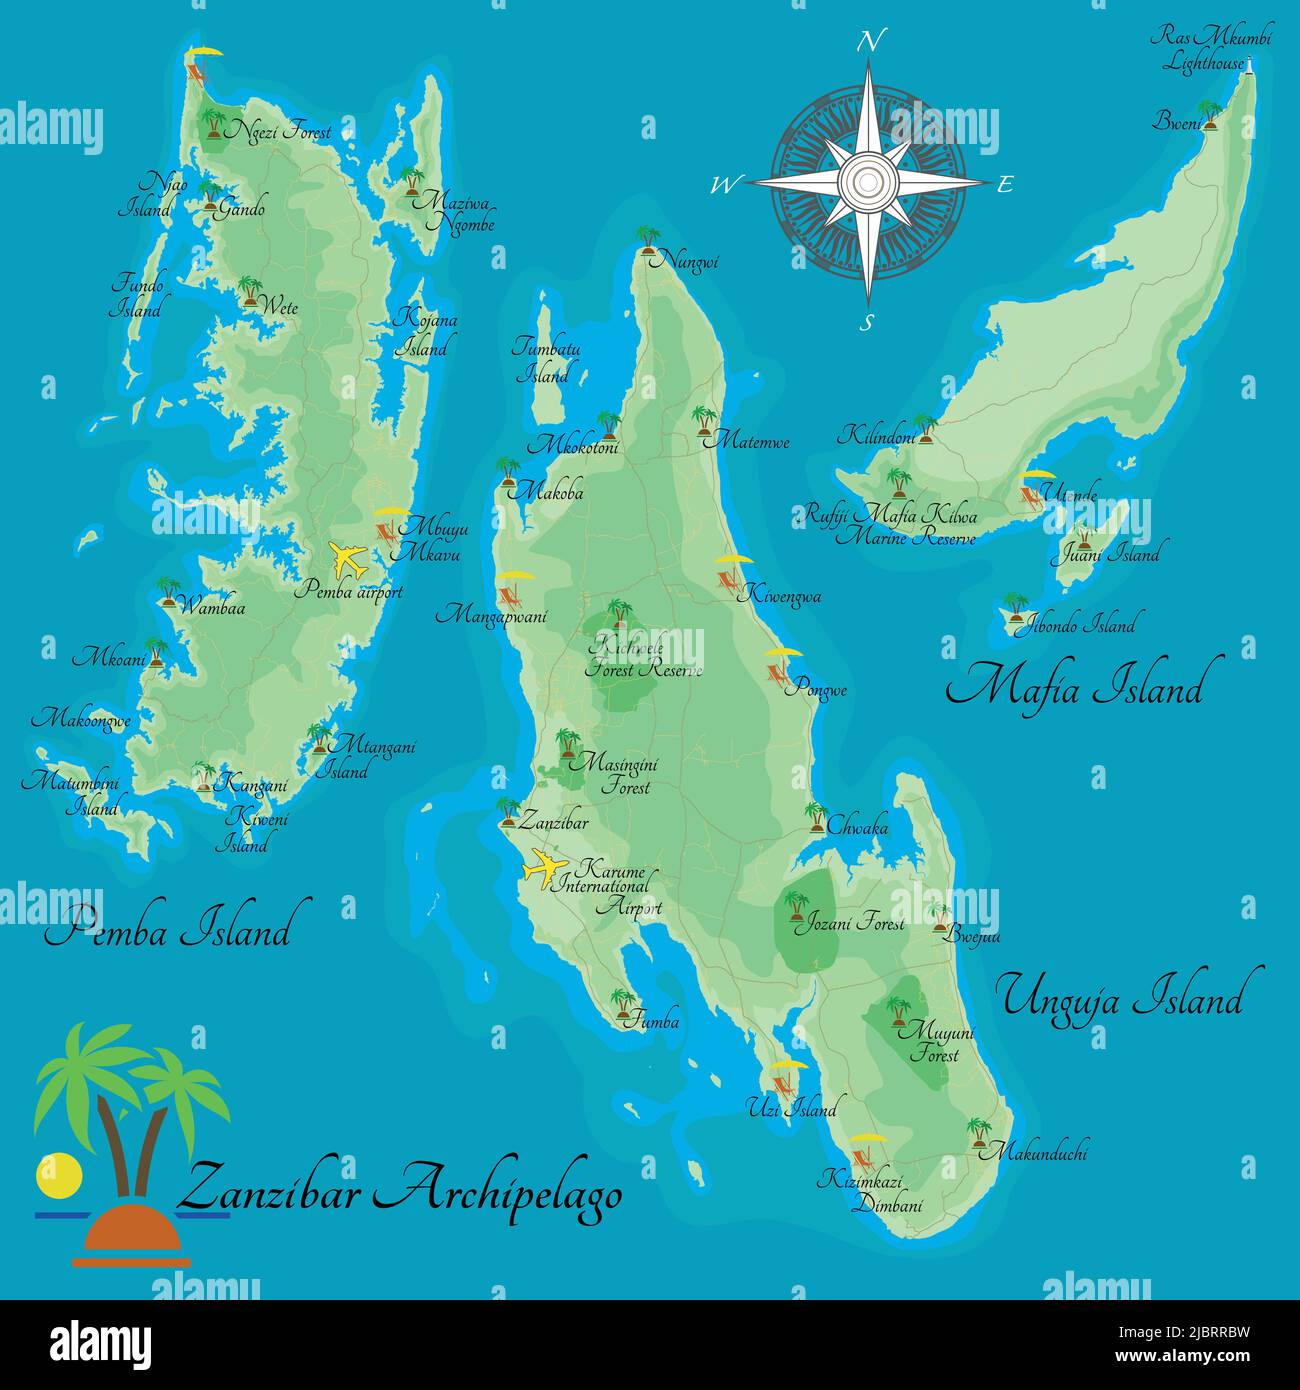 Zanzibar Archipelago. Realistic illustration of islands Unguja Island, Pemba Island, Mafia Island, semi-autonomous region of Tanzania. Tourist map. Stock Vector